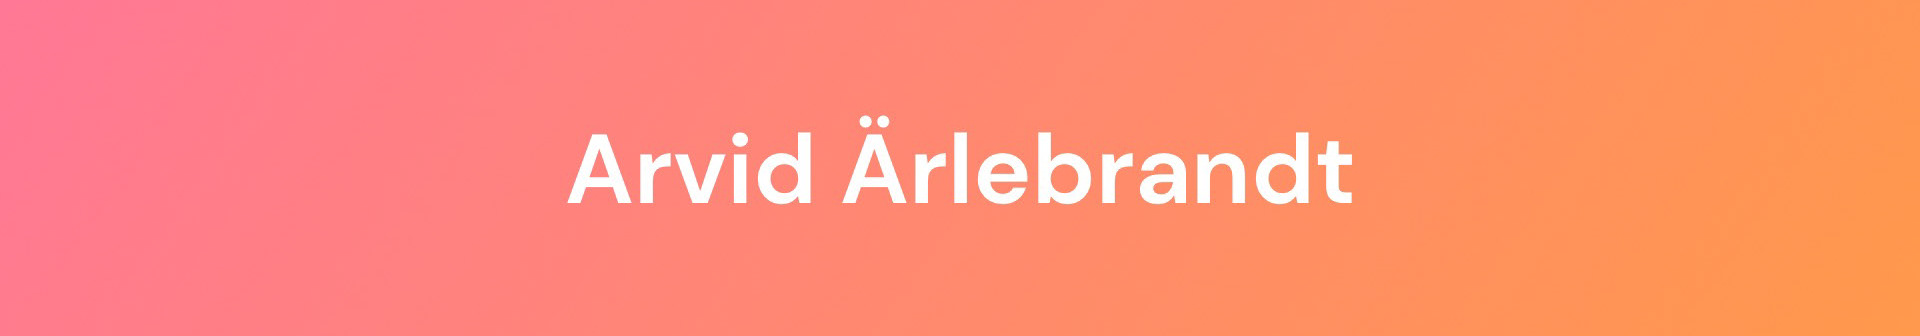 Arvid Ärlebrandt's profile banner